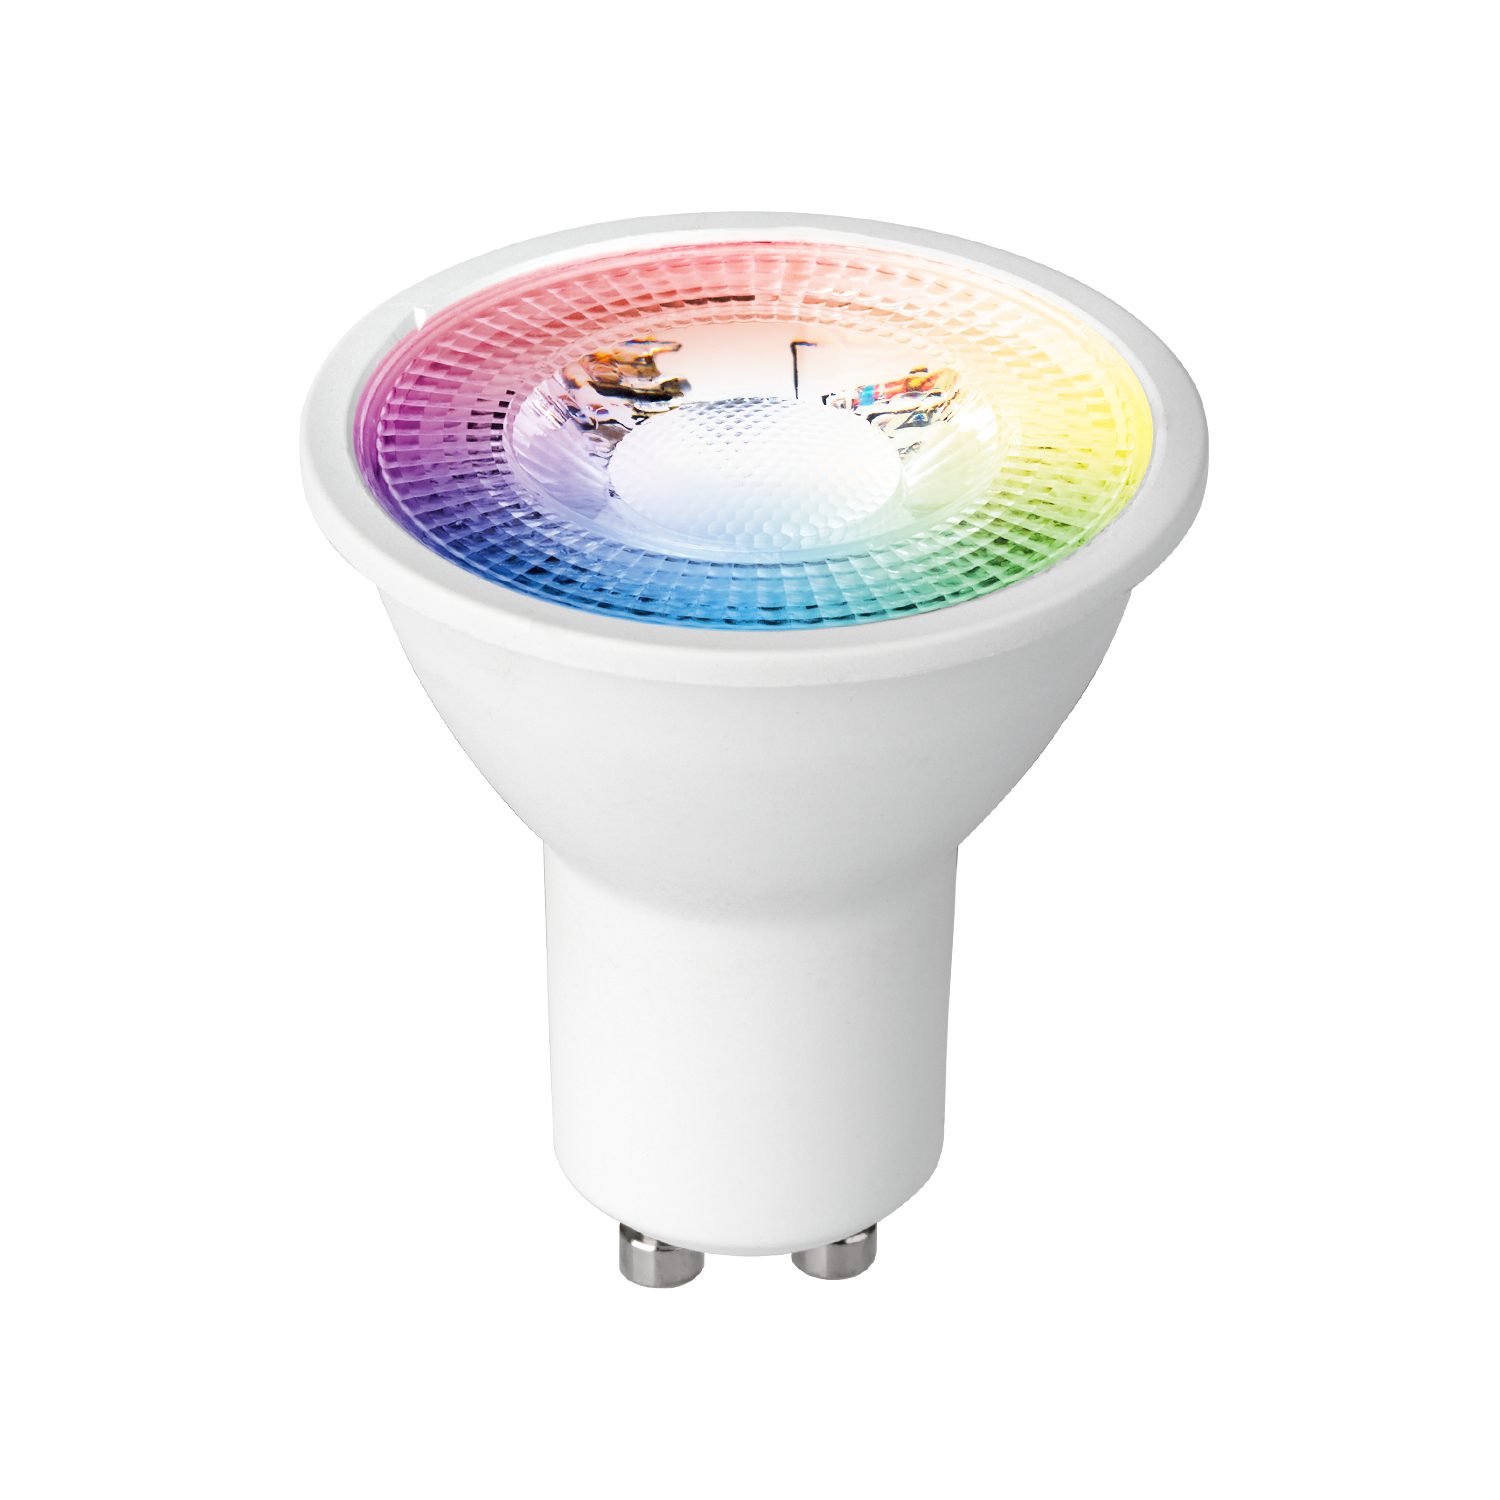 Einbaustrahler Einbaustrahler LED von LEDANDO LED in LED 3W GU10 Set Kristall 3er mit RGB Glas /